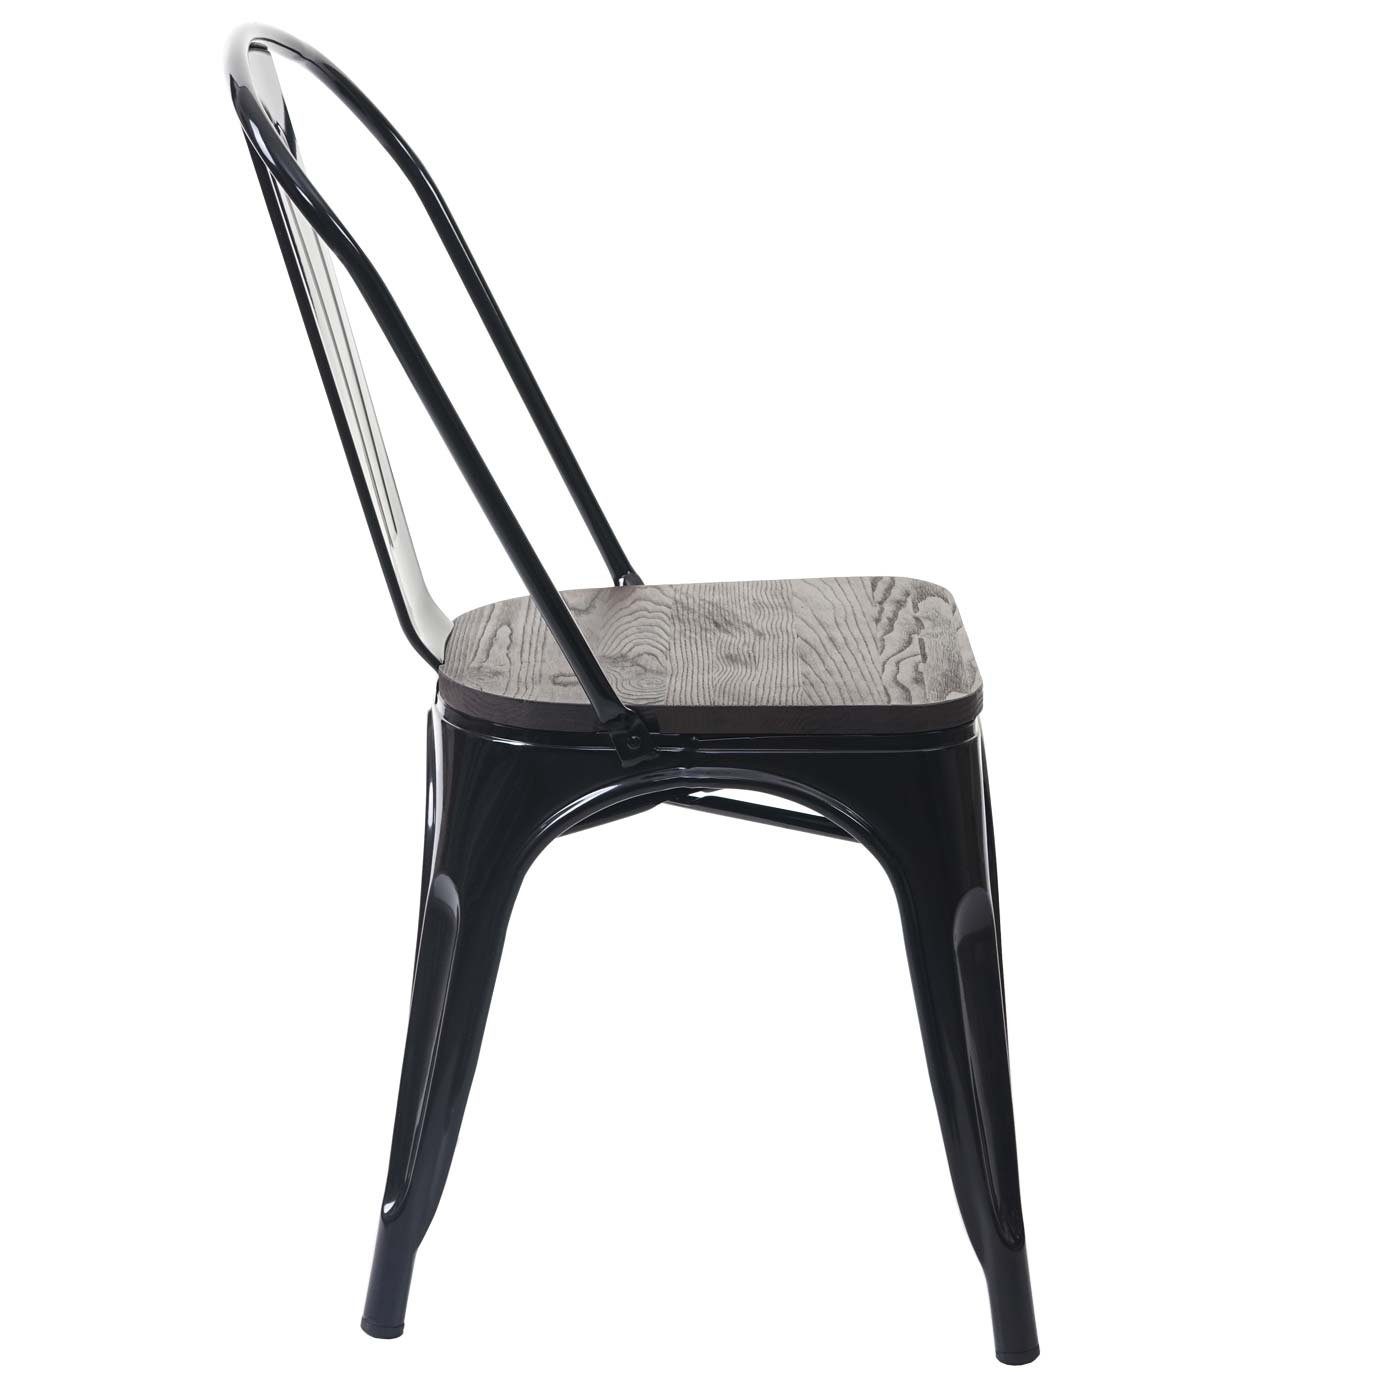 Holzsitzfläche, St), MCW pro Belastbarkeit MCW-A73-Ho-6 6er-Set, 120 mit Stuhl: kg schwarz Maximale (Set, Bistrostuhl 6